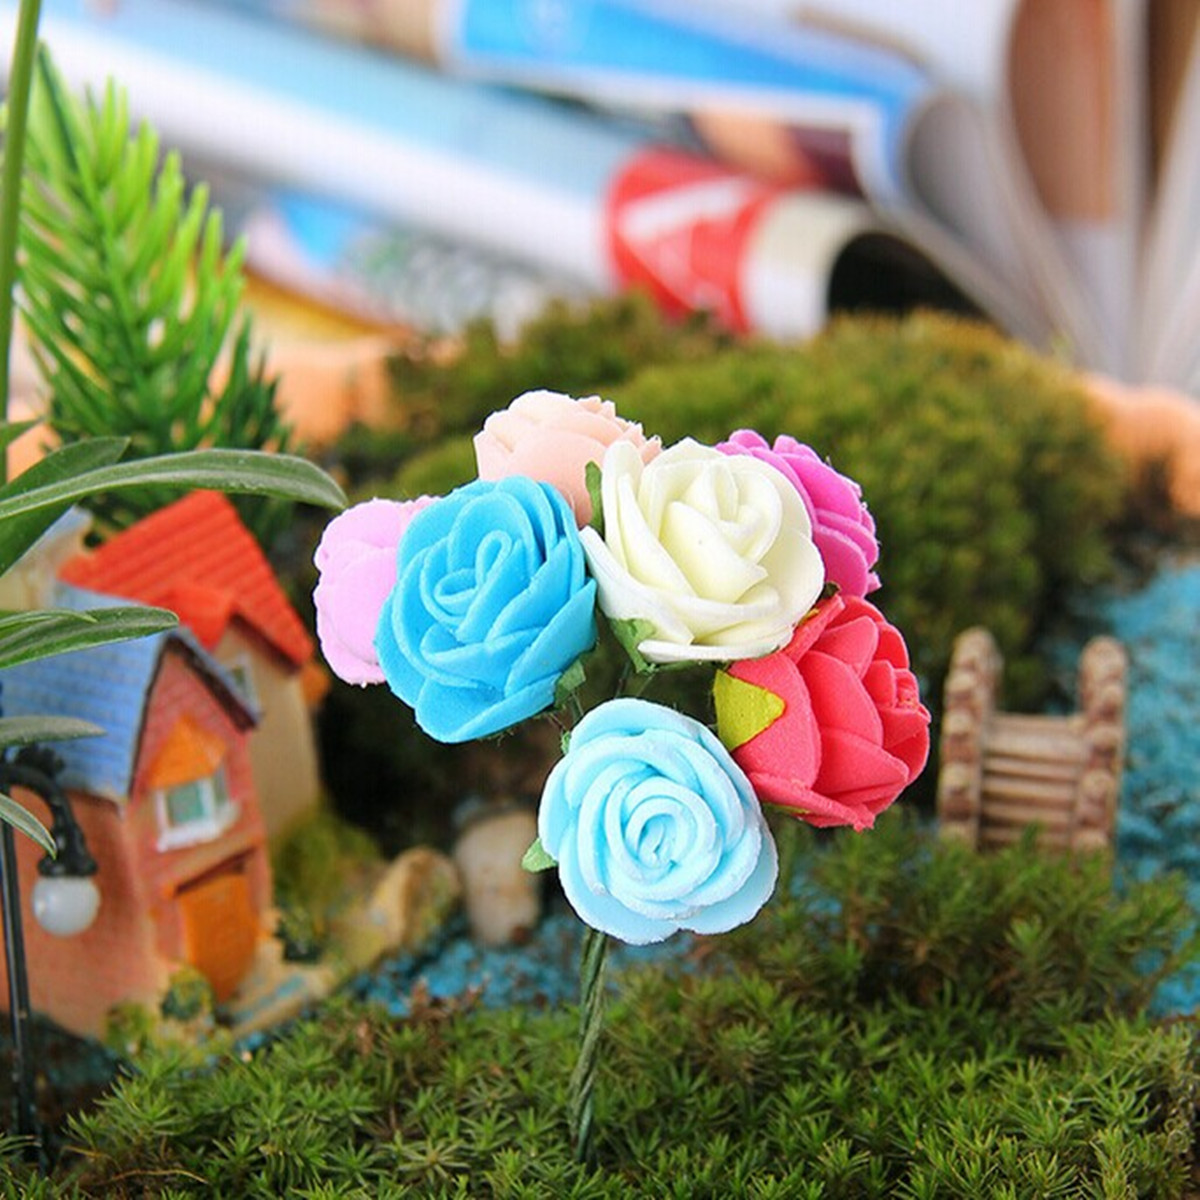 Miniature Tree House Ornaments Potted Plant Craft Garden Bonsai DIY Decor